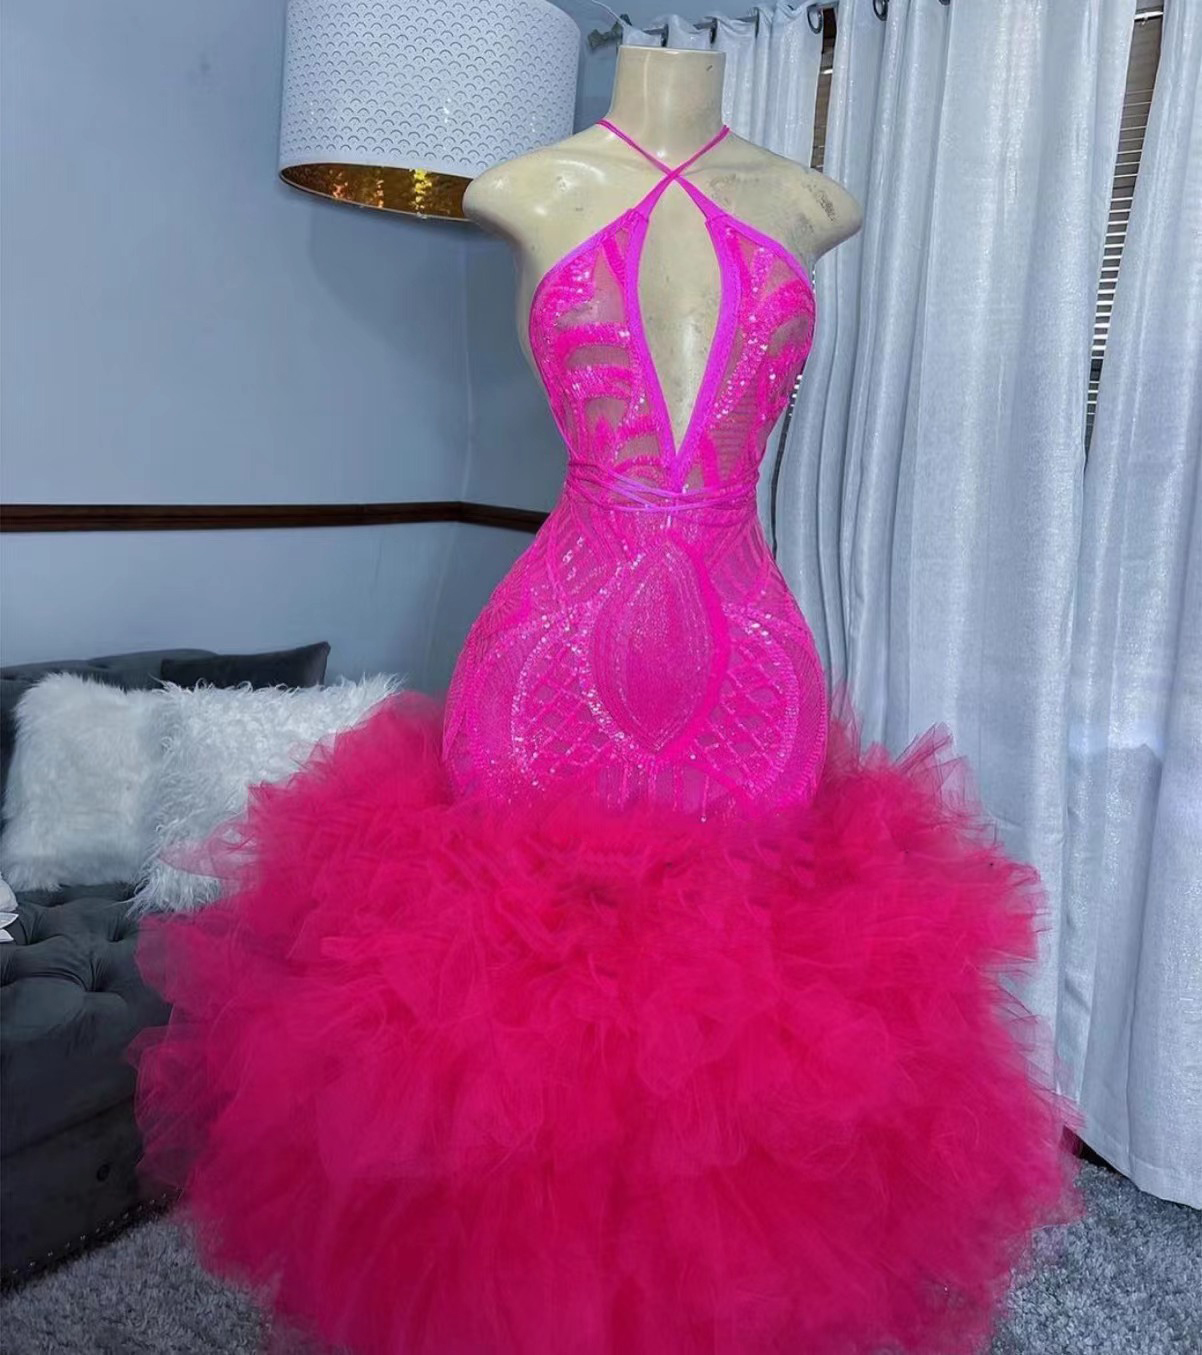 Halter Prom Dresses, Pink Prom Dresses, Robes De Soiree Femme, Sparkly Sequin Applique Prom Dresses, Evening Dresses For Women, Formal Occasion